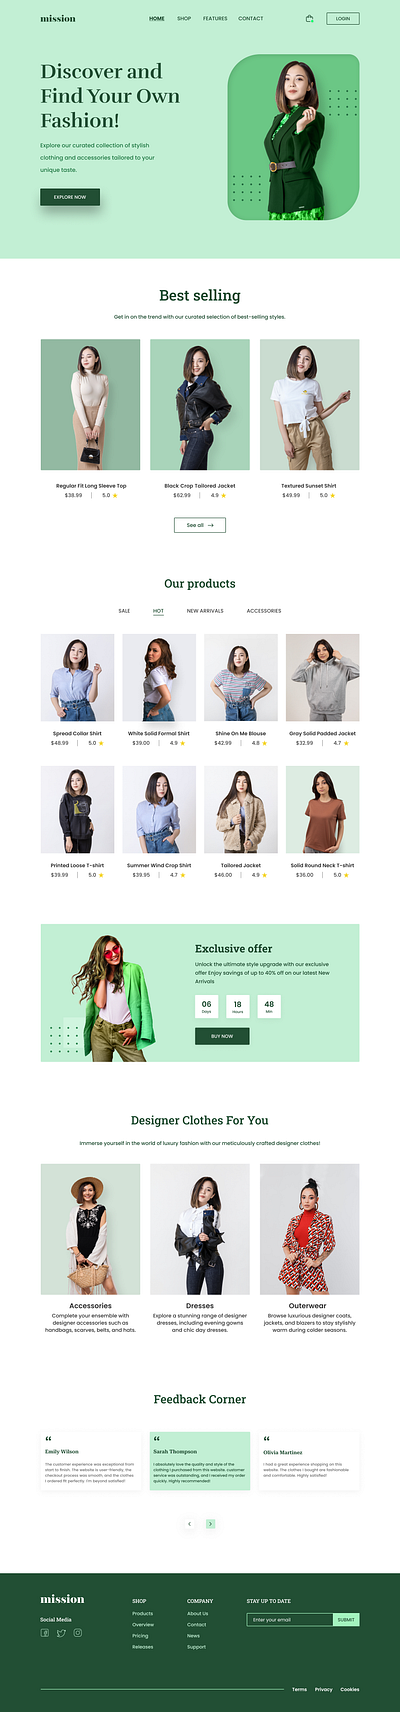 mission - fashion website